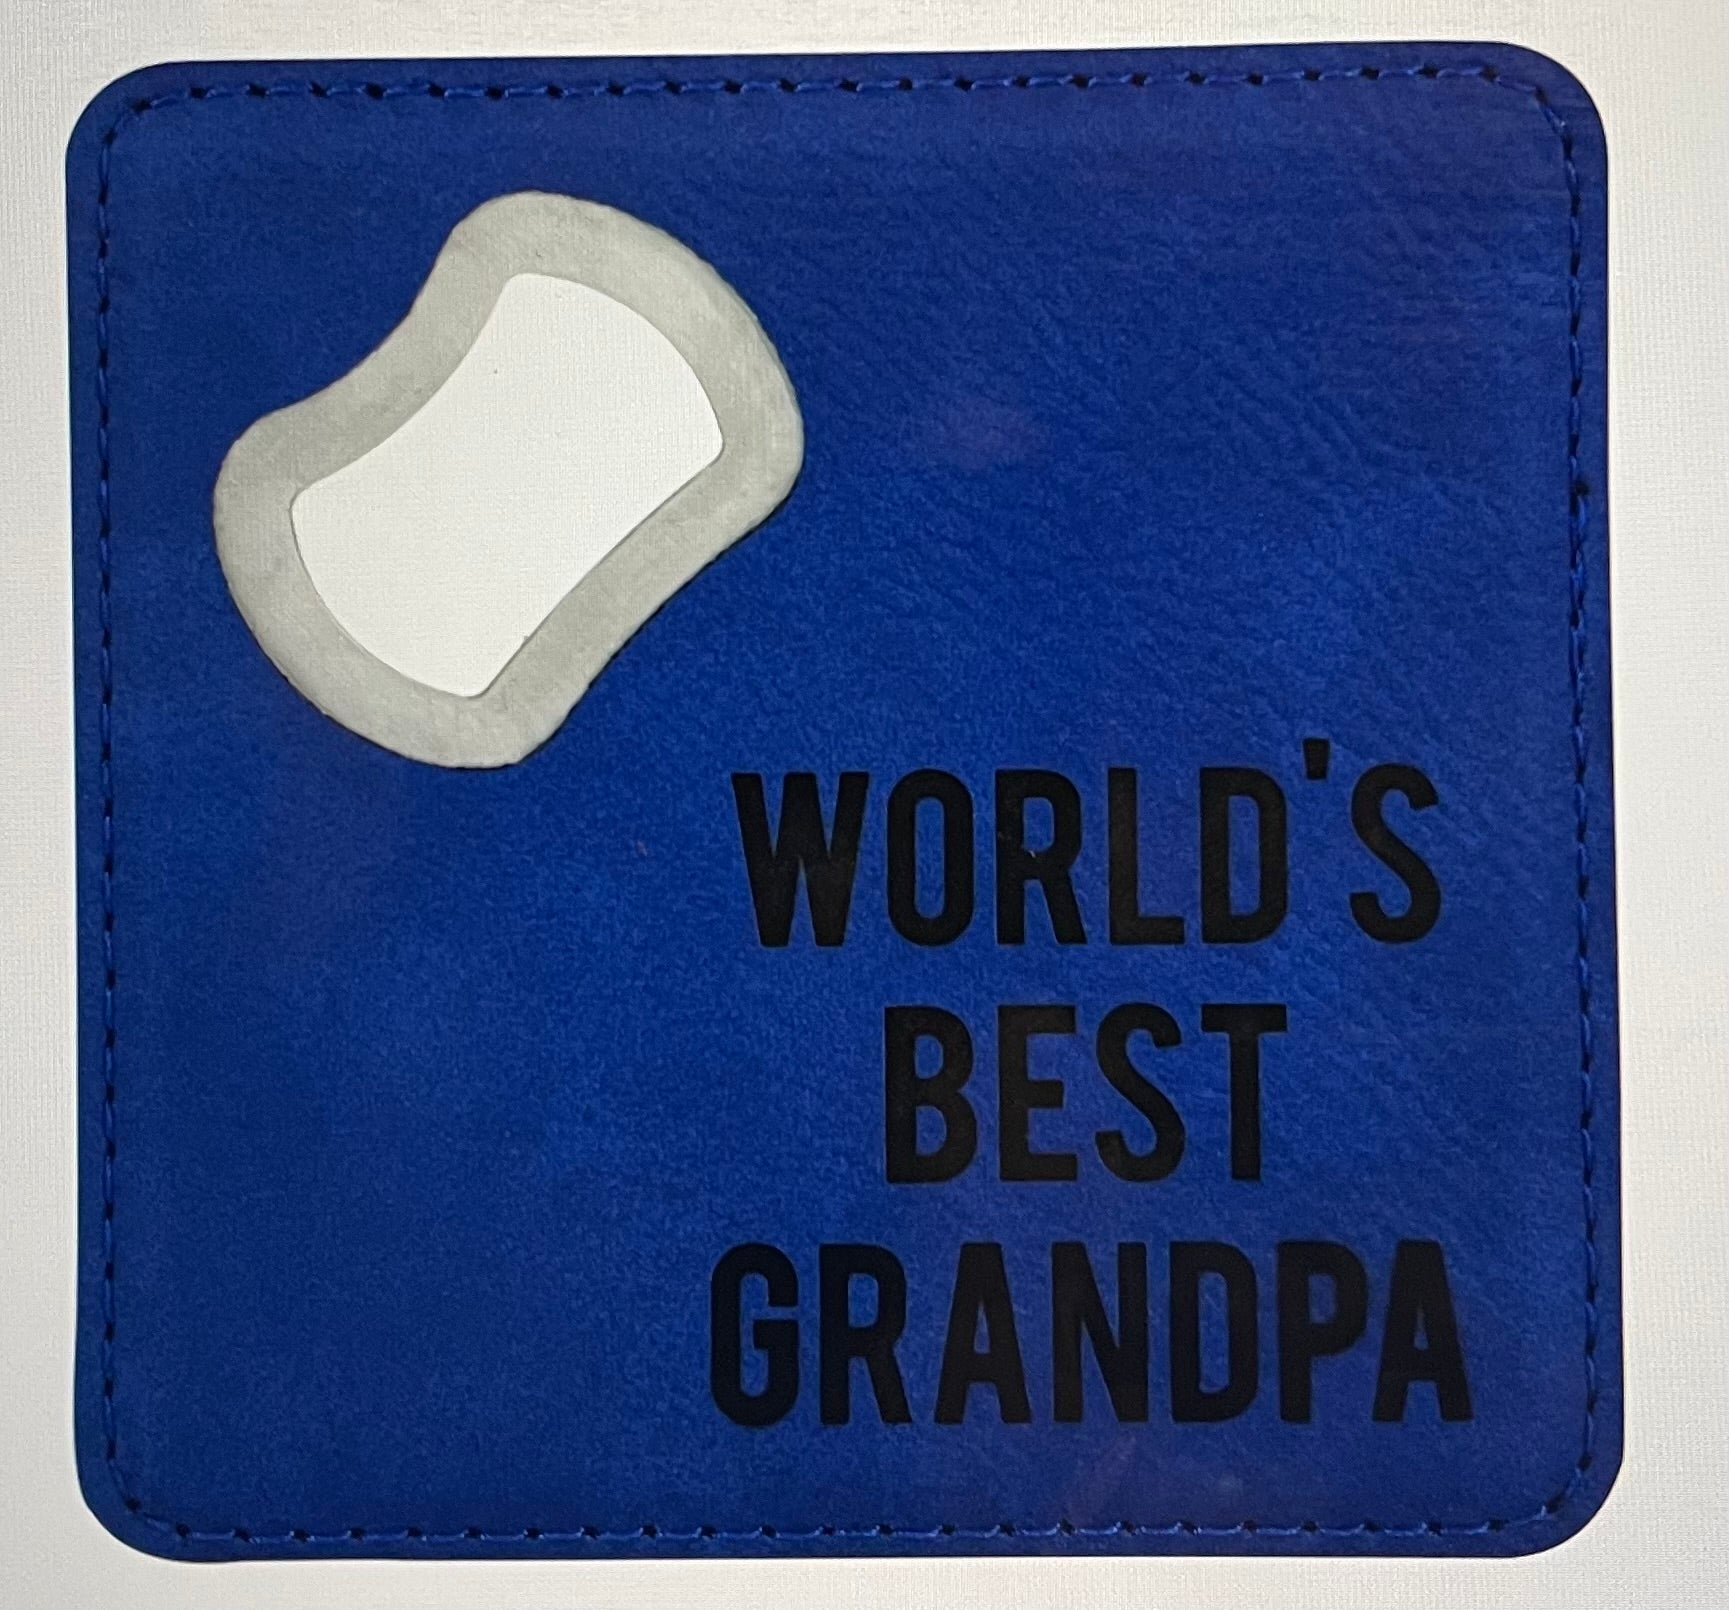 Grandpa - 4" x 4" Bottle Opener Coaster